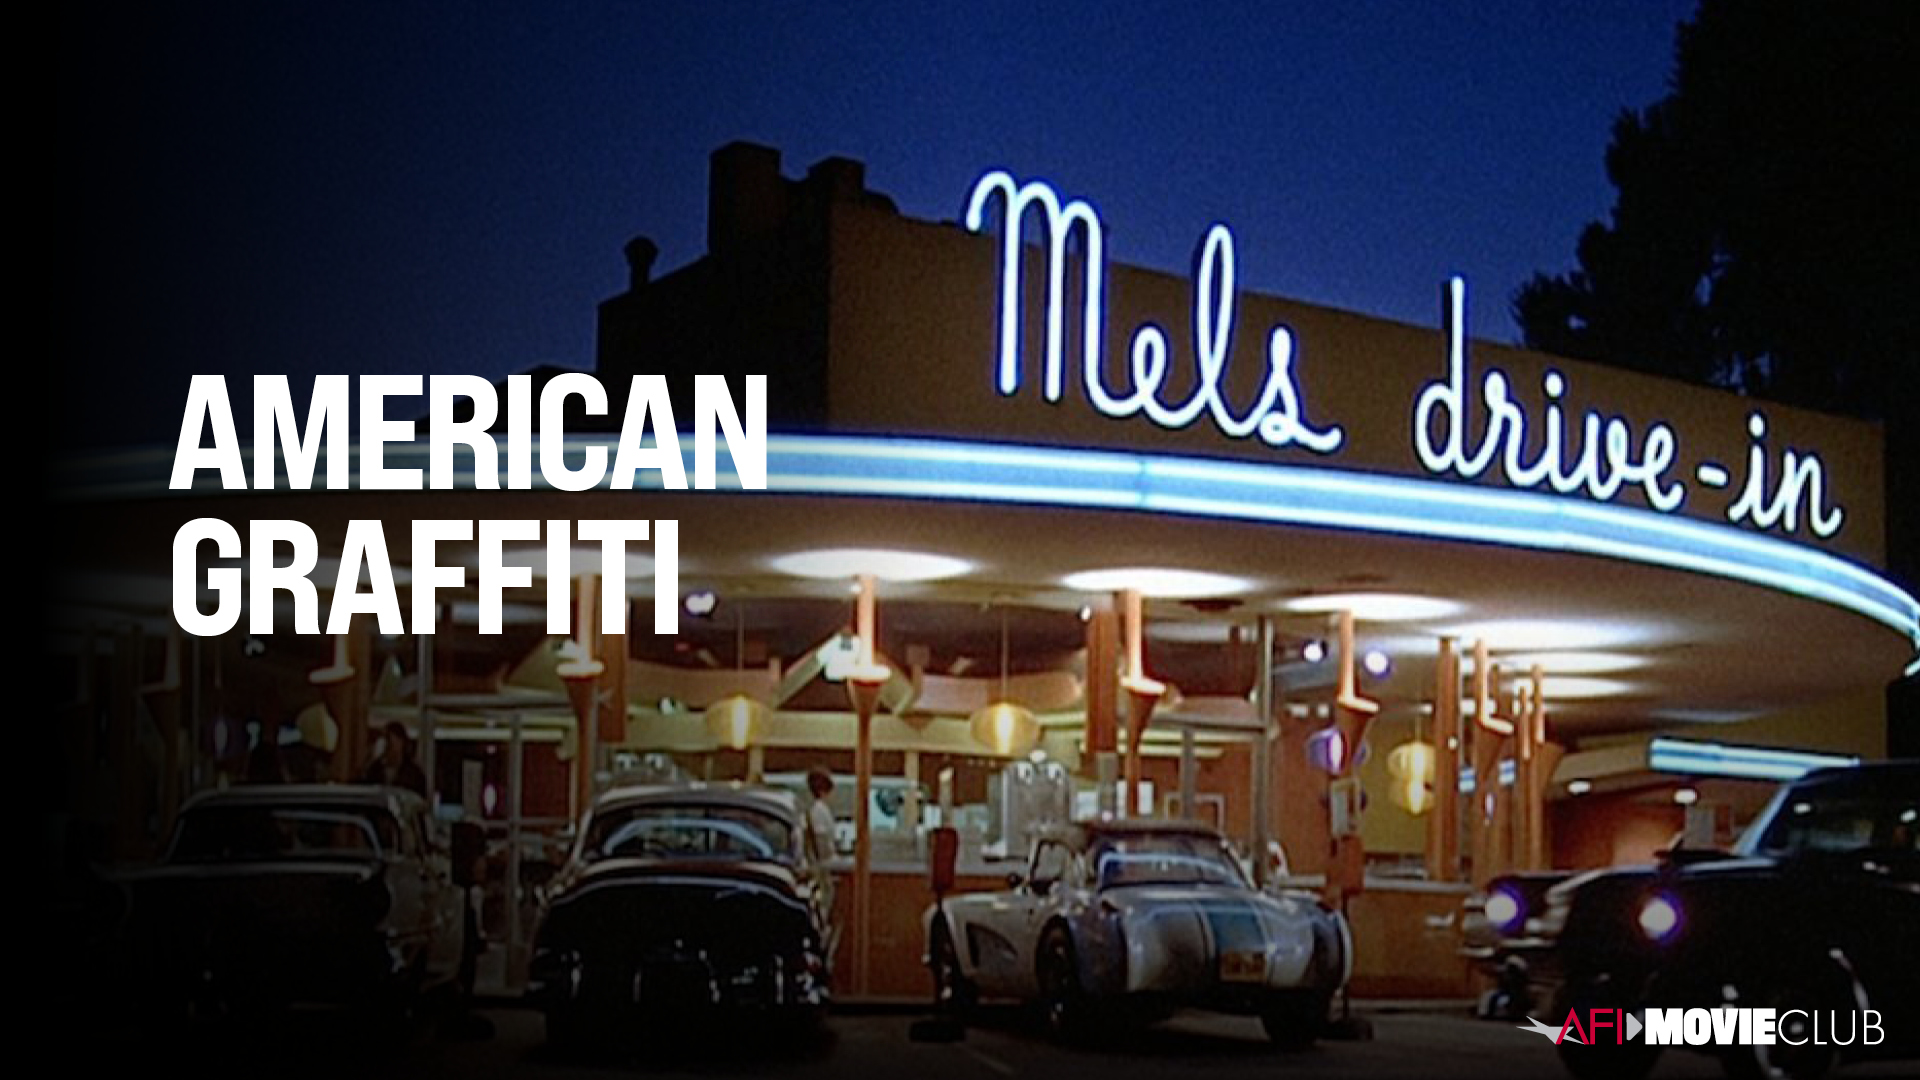 American Graffiti Film Still - Mel's Drive-In Restaurant